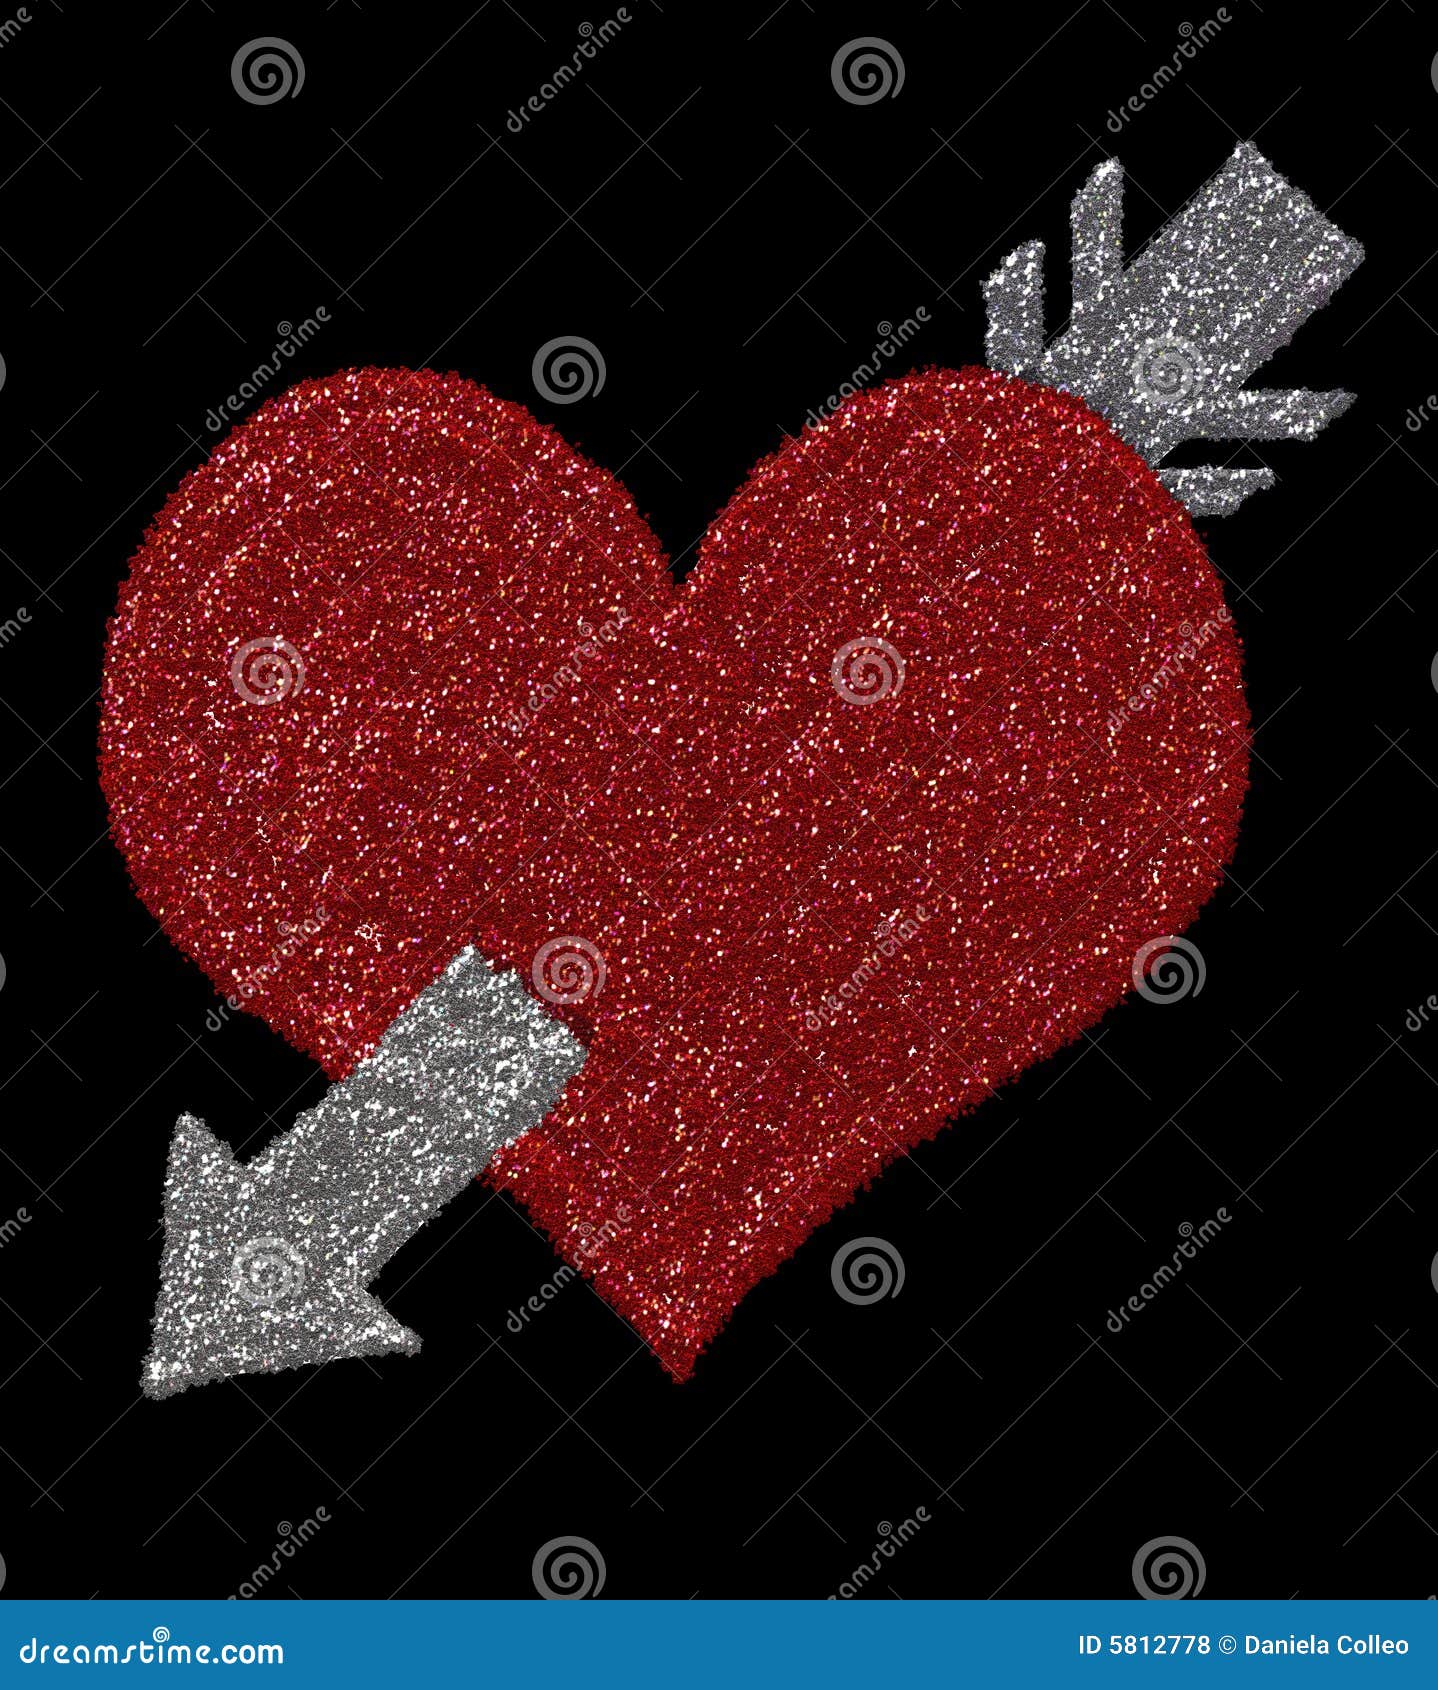 digital glitters: heart with arrow